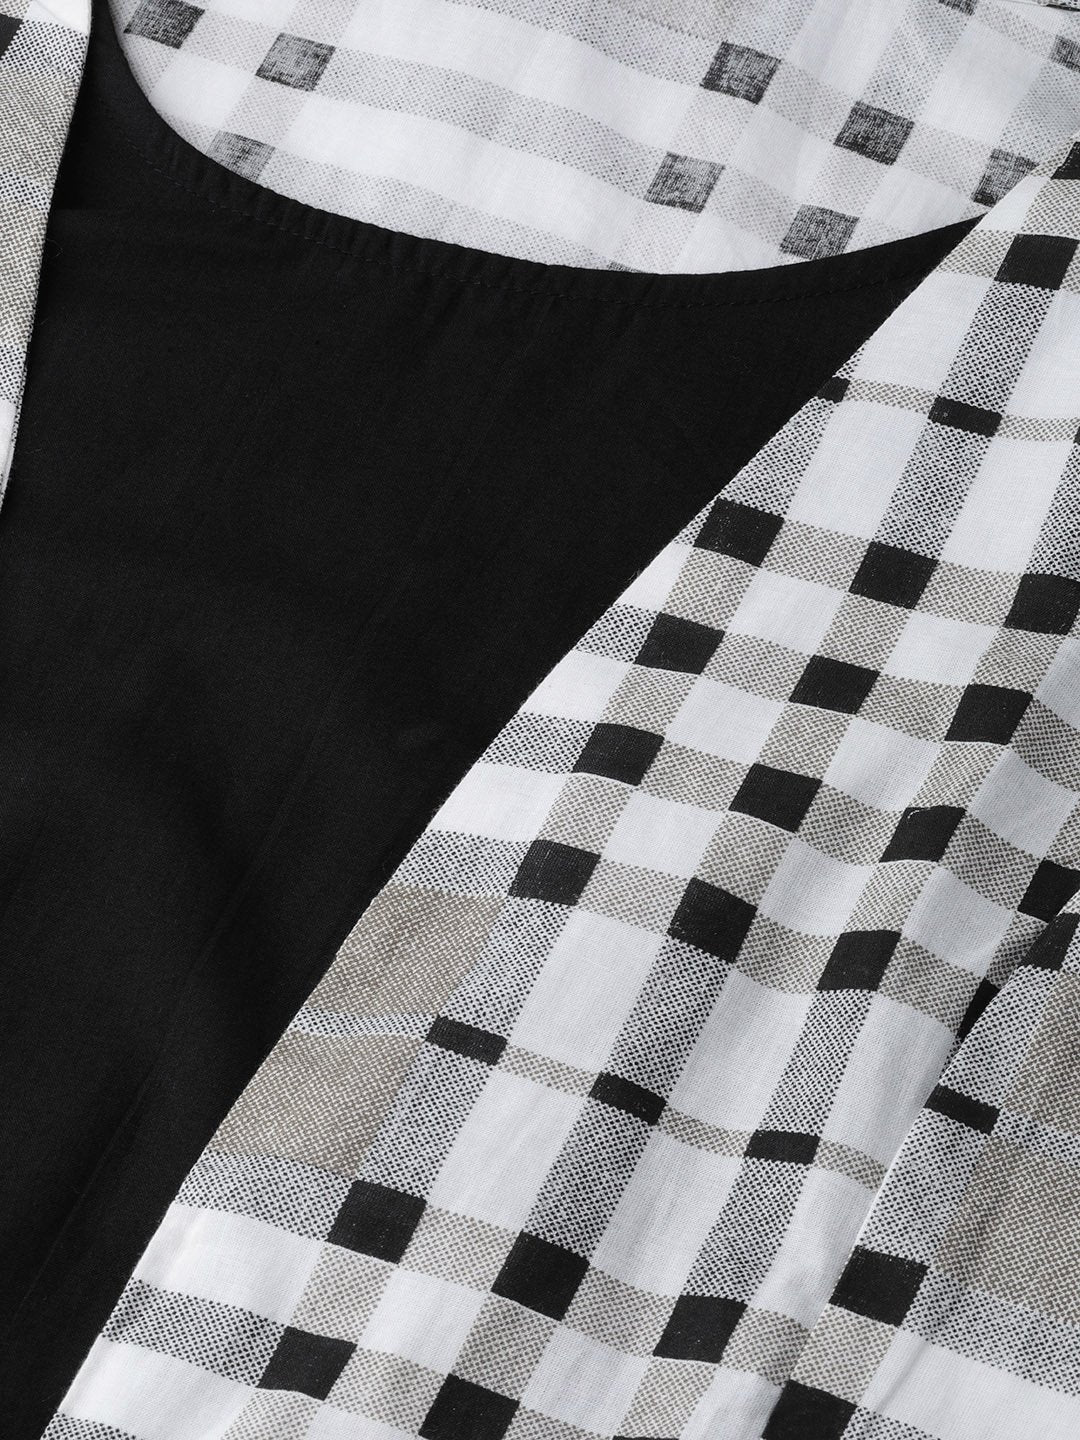 Women's  White & Black Checked Layered A-Line Dress - AKS